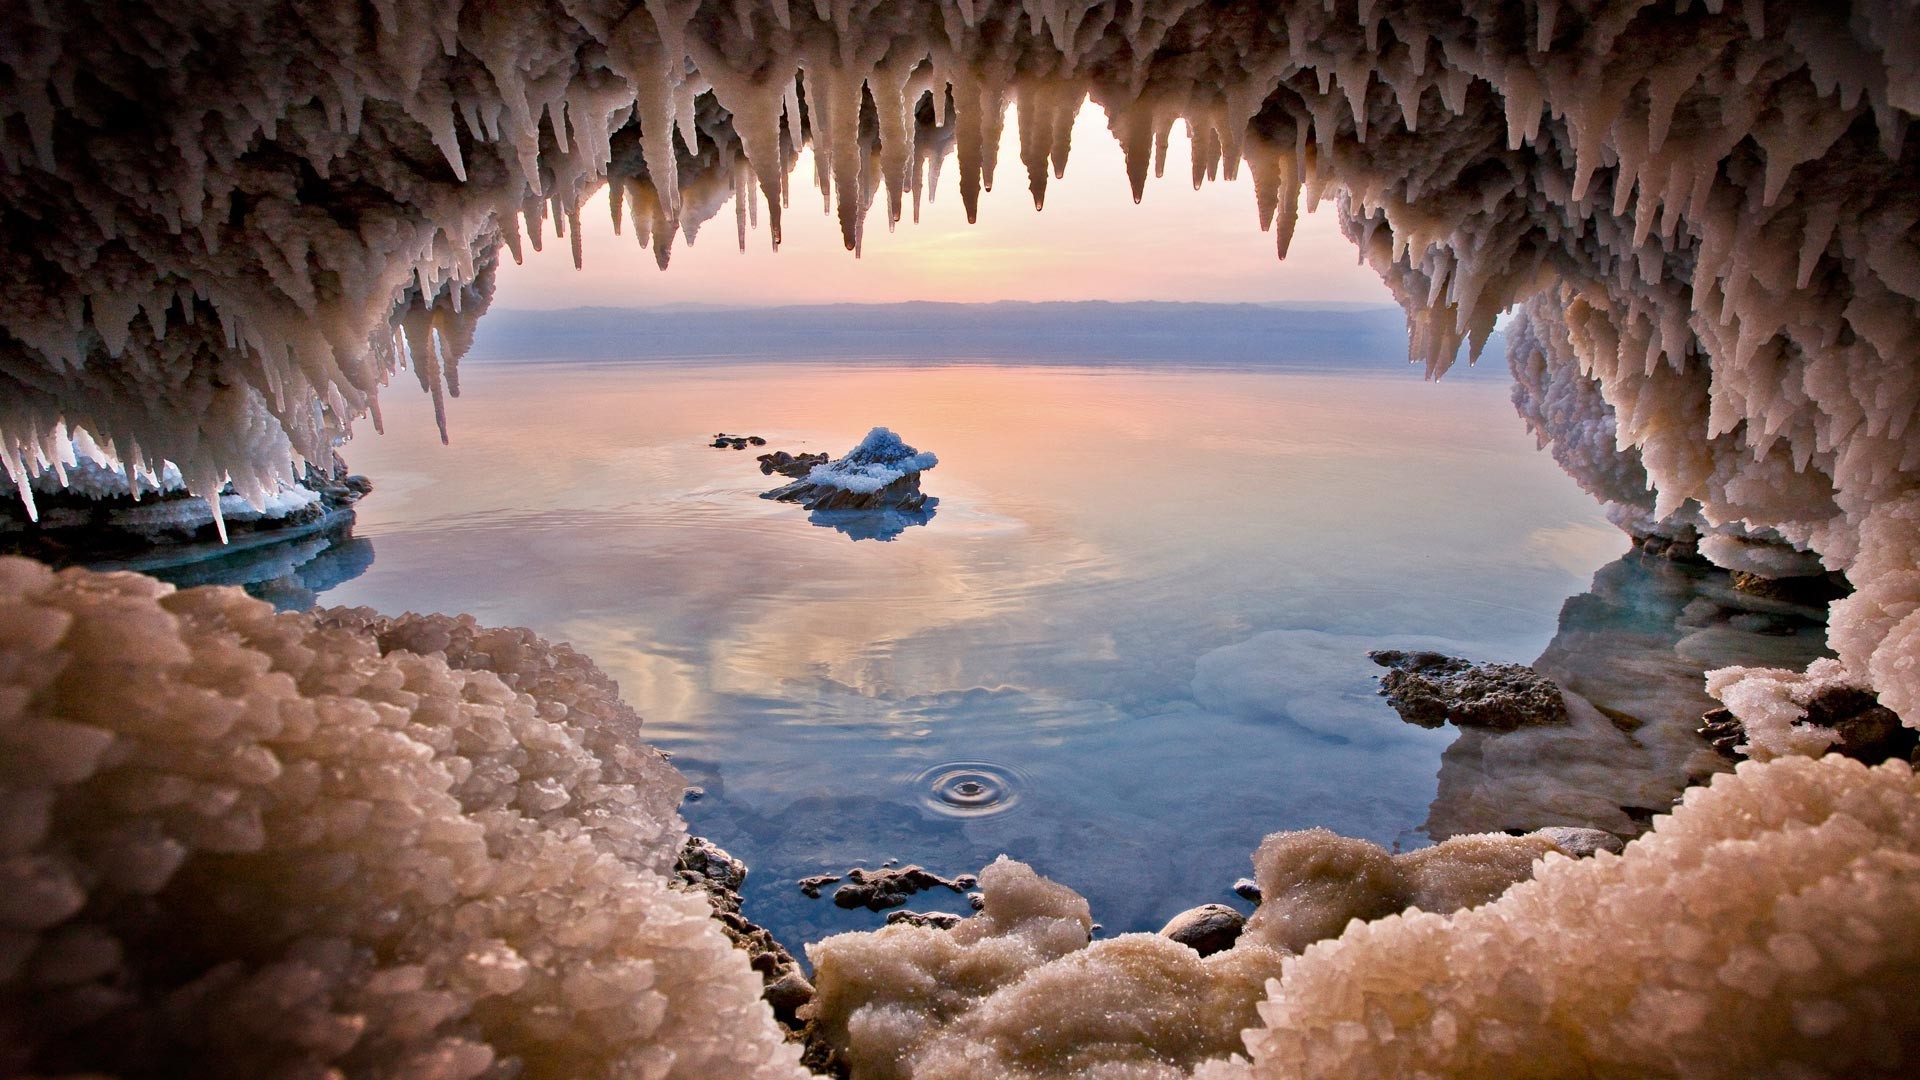 nature, Landscape, Water, Sea, Jordan (country), Dead Sea, Cave, Sunset